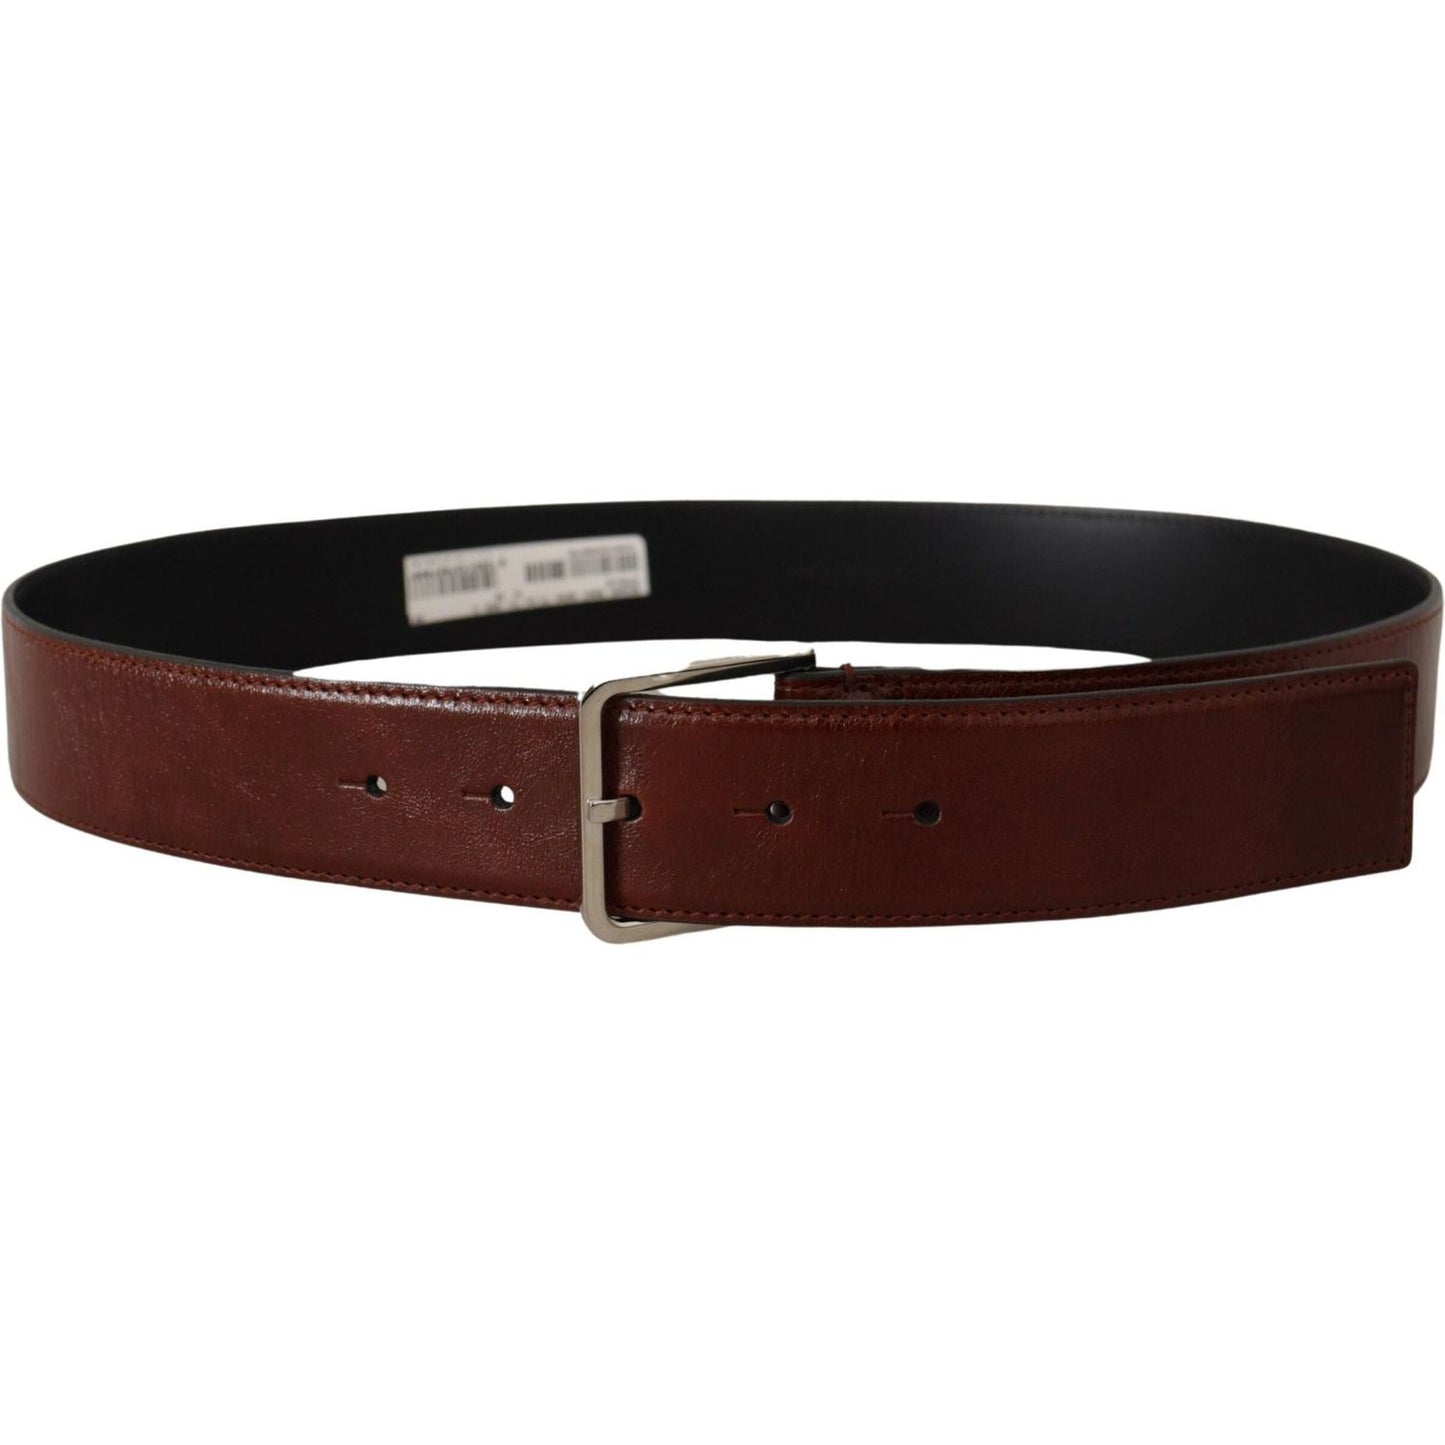 Dolce & Gabbana Elegant Leather Belt with Engraved Buckle bordeaux-calf-patent-leather-logo-waist-buckle-belt IMG_8763-scaled-612111af-181.jpg